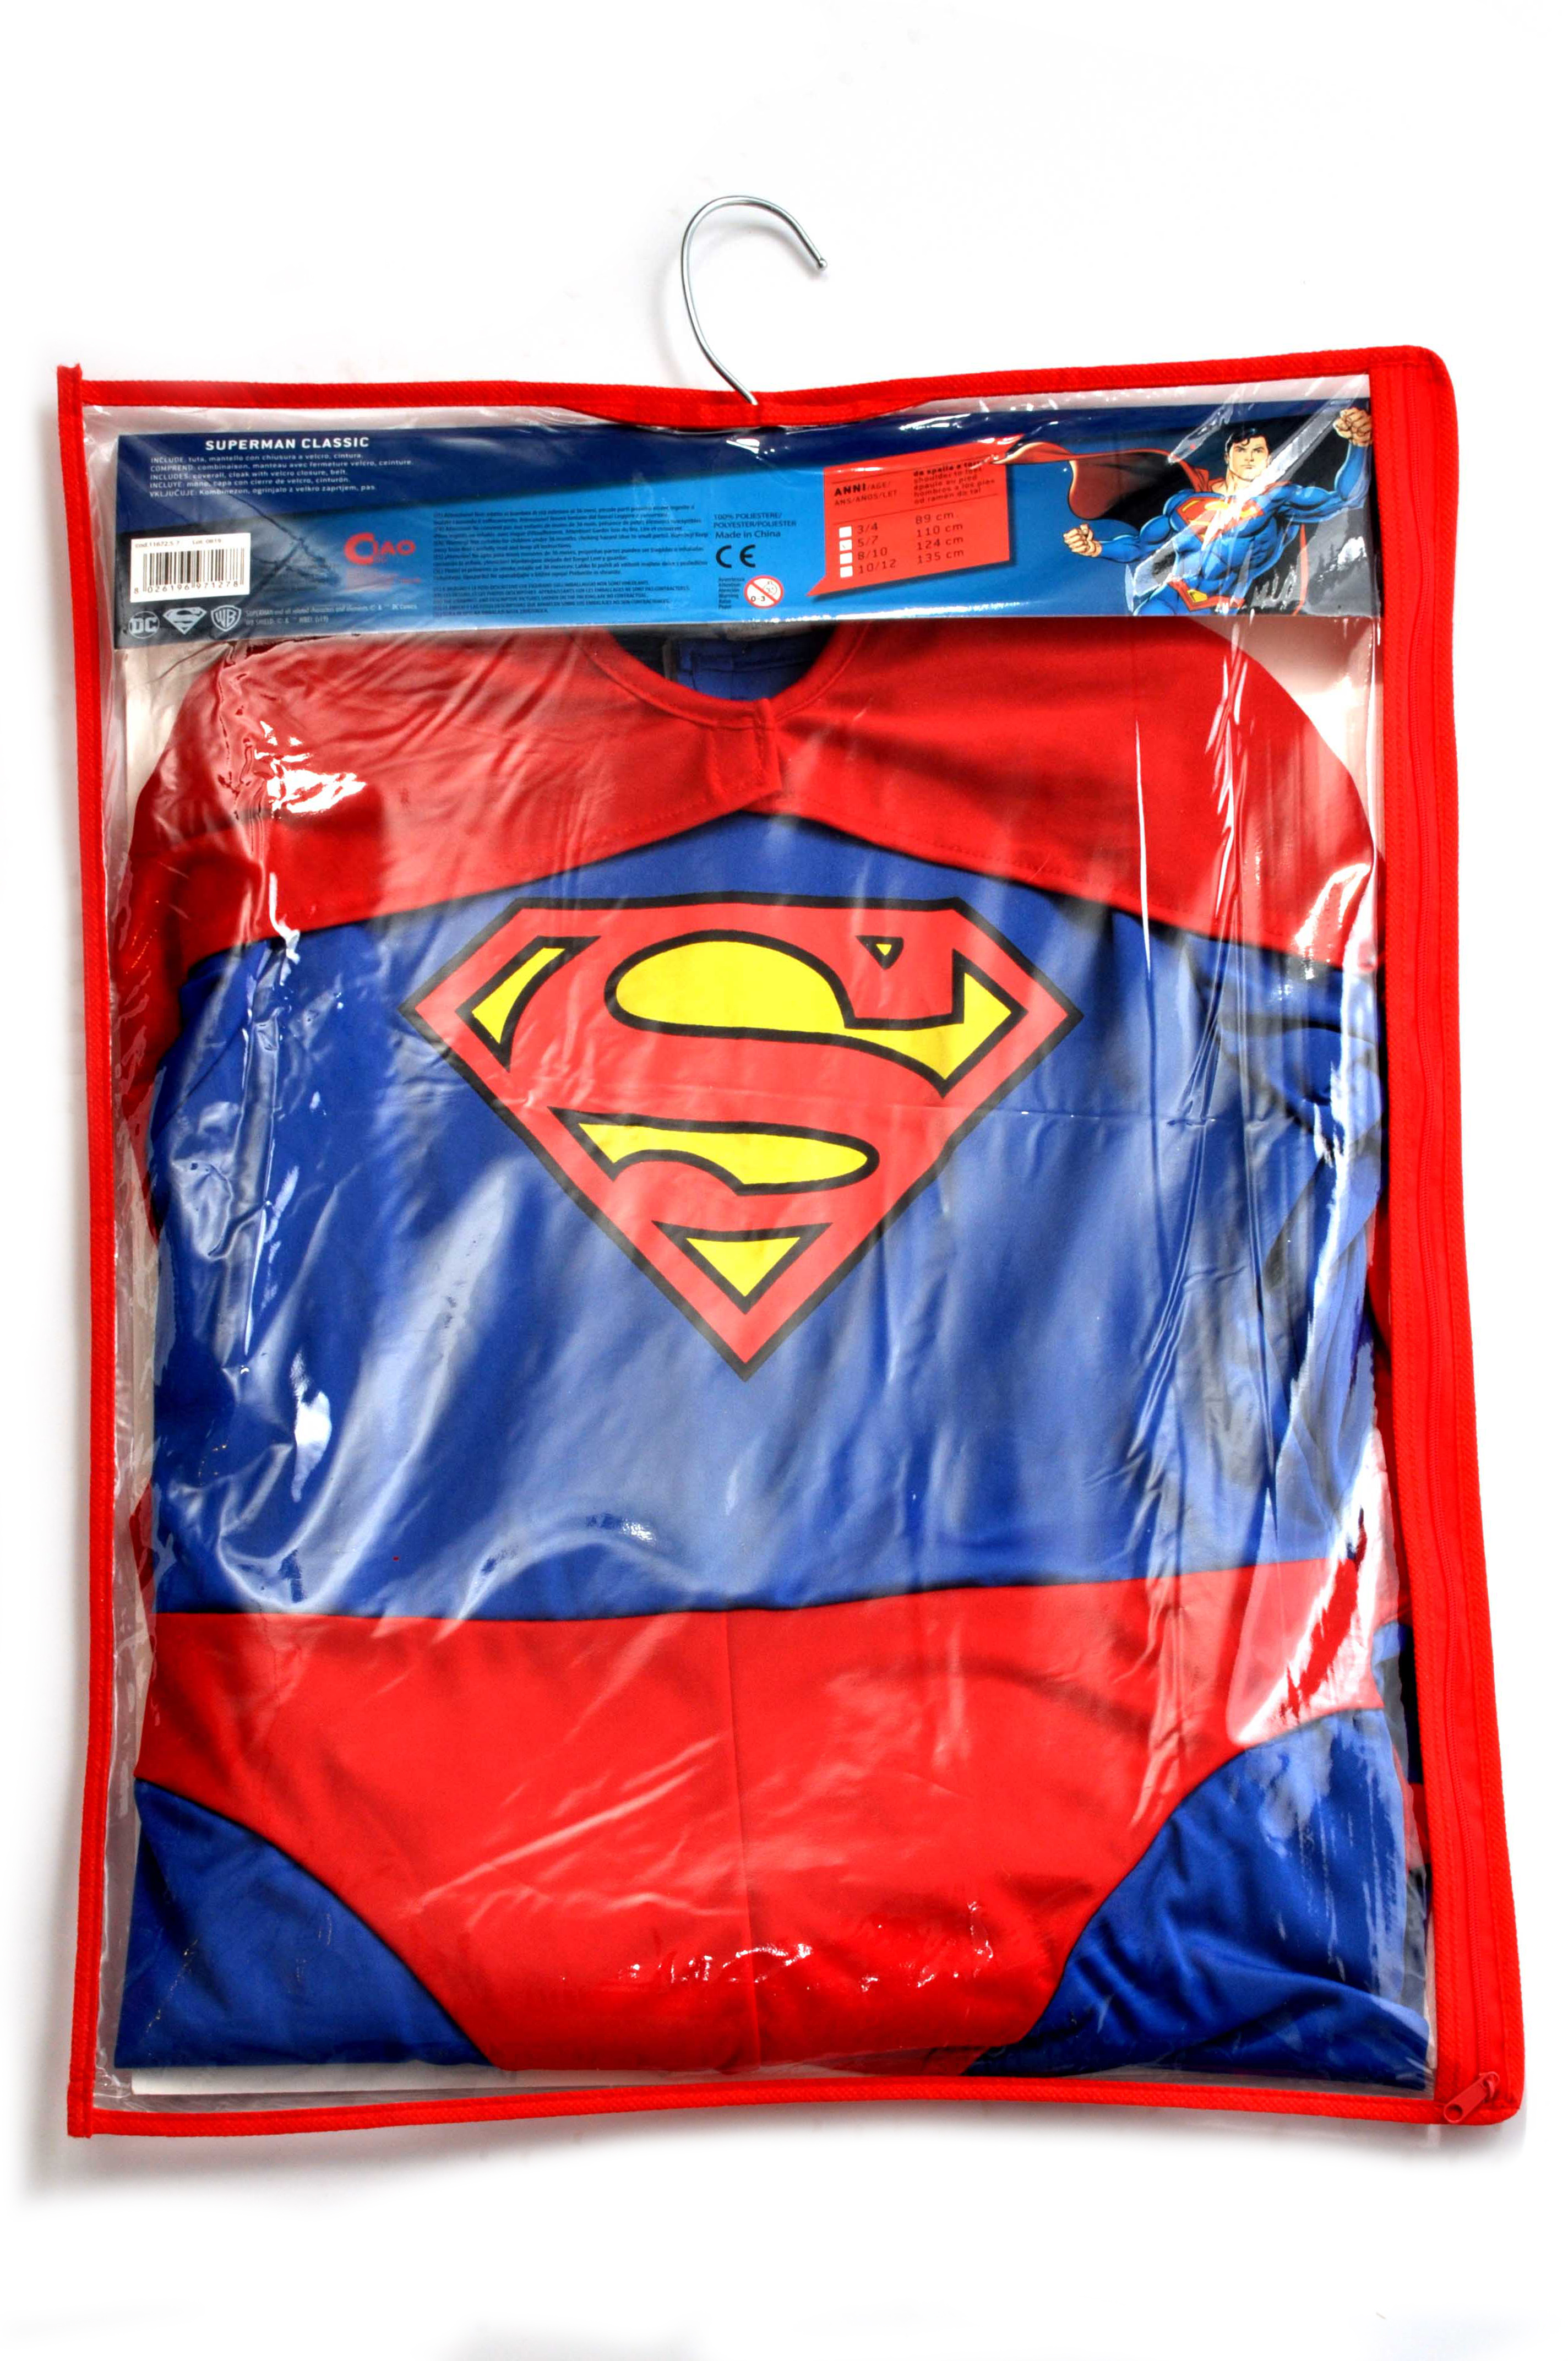 Kostume - Superman (135 cm)